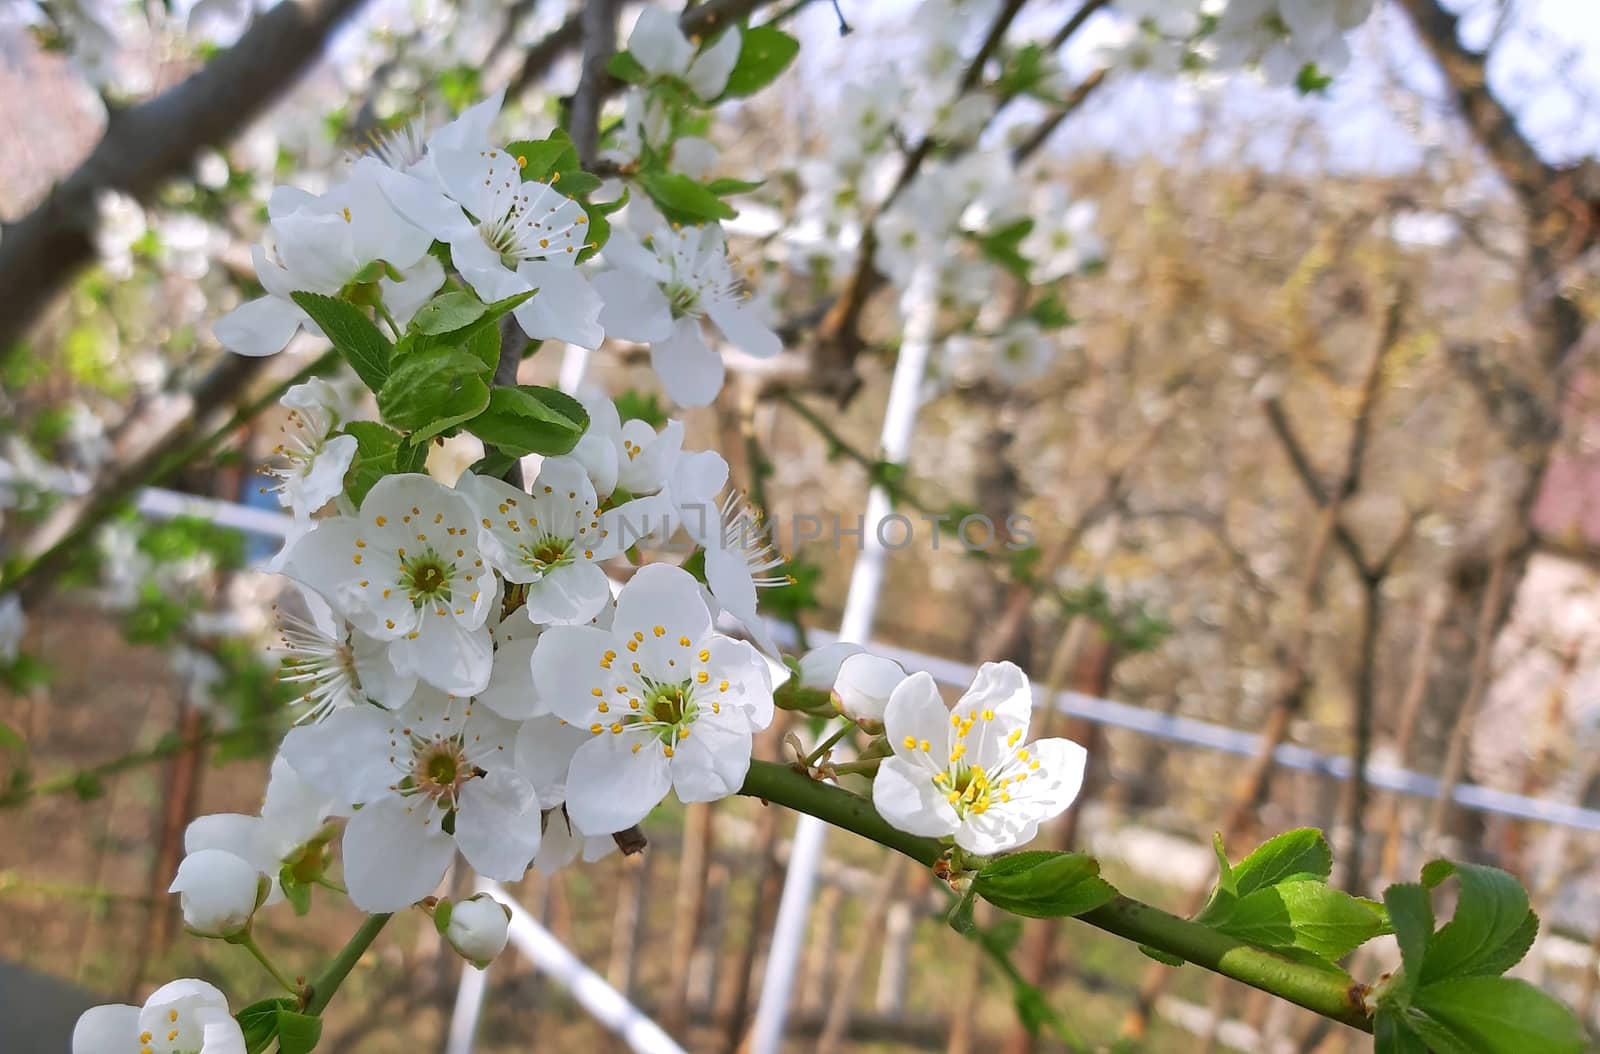 Prunus tree blooming in the spring beautiful white petals by Mindru